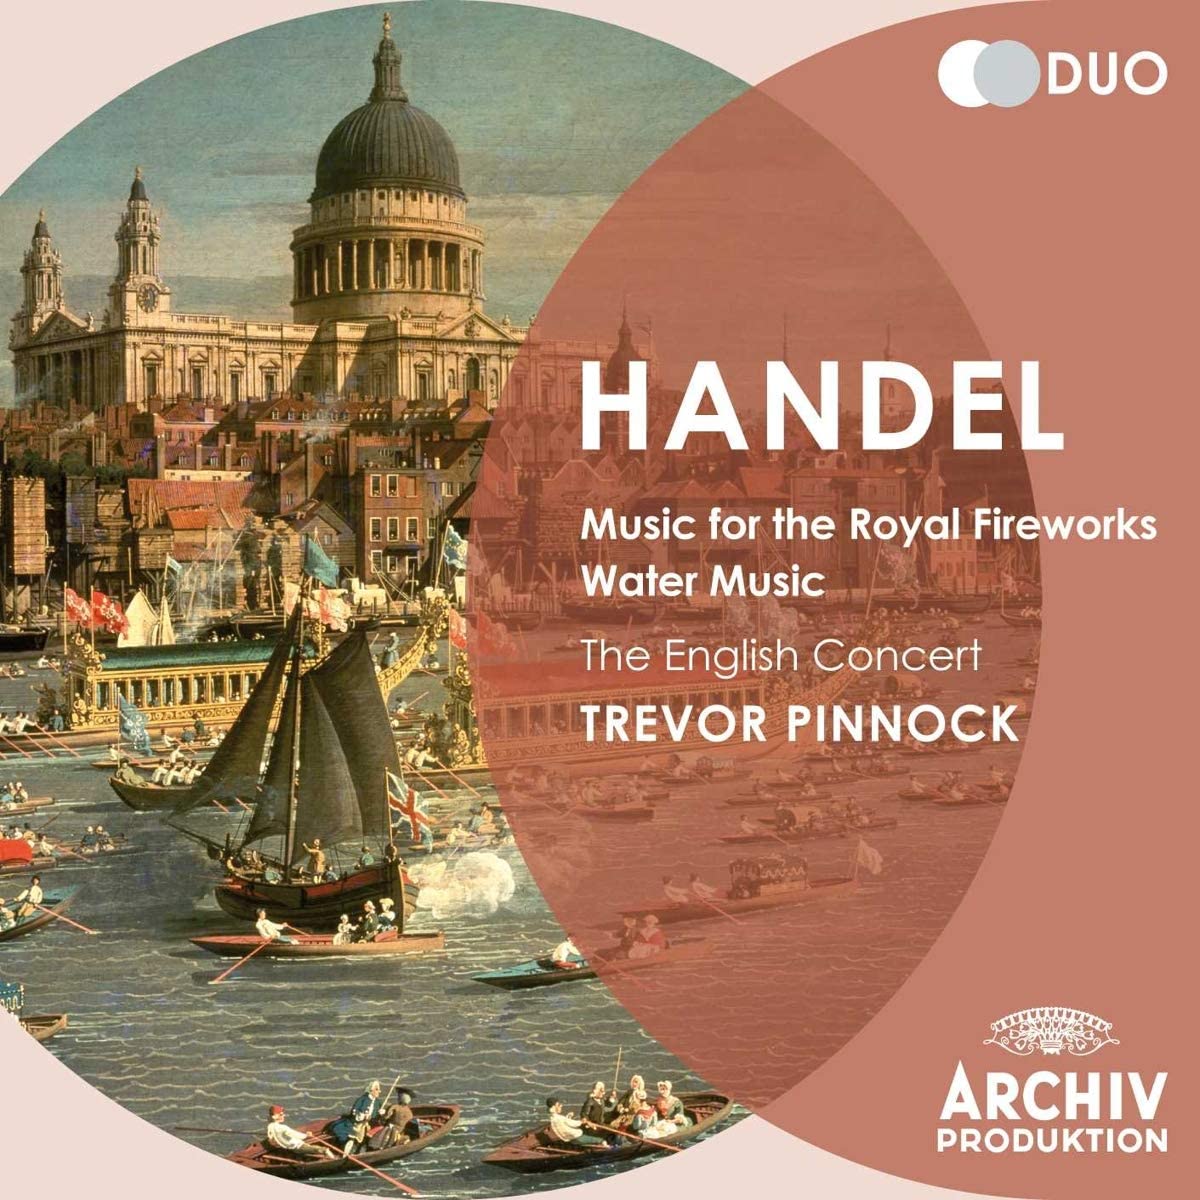 Handel: Music for the Royal Fireworks; Water Music | Georg Friedrich Handel, The English Concert, Trevor Pinnock carturesti.ro poza noua